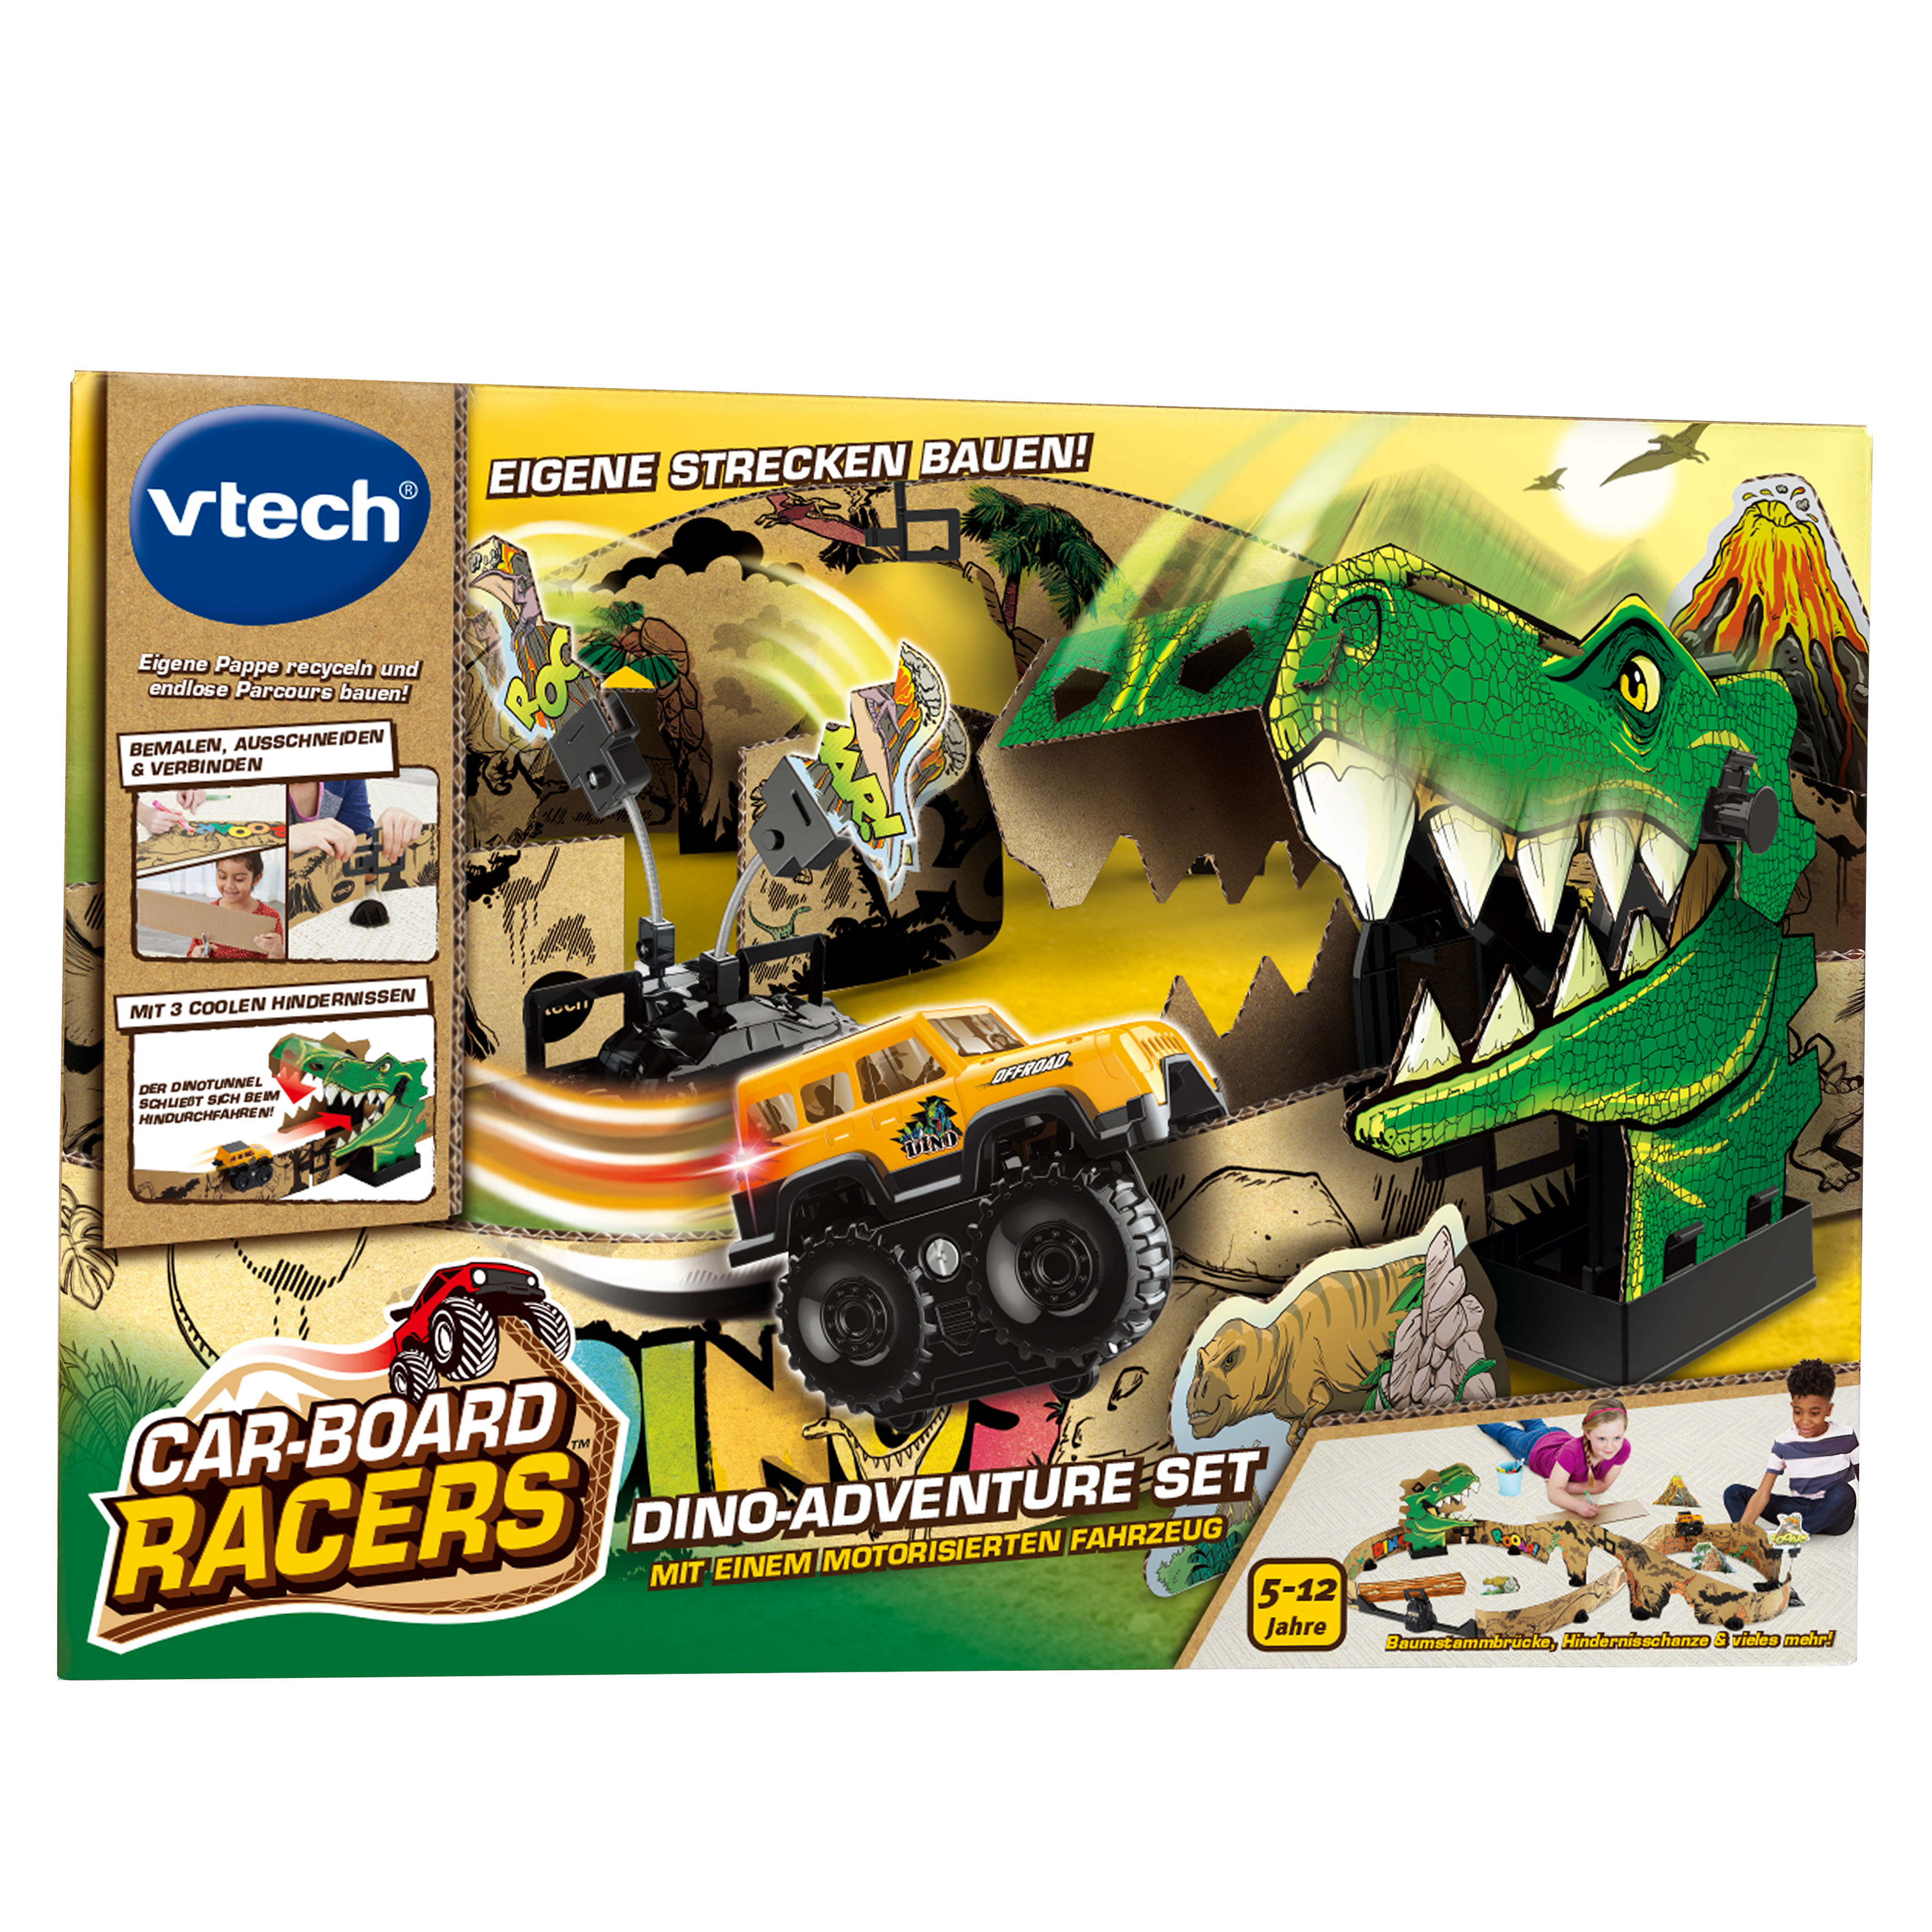 VTech Car-Board Racers - Dino-Adventure Set (80-563304)